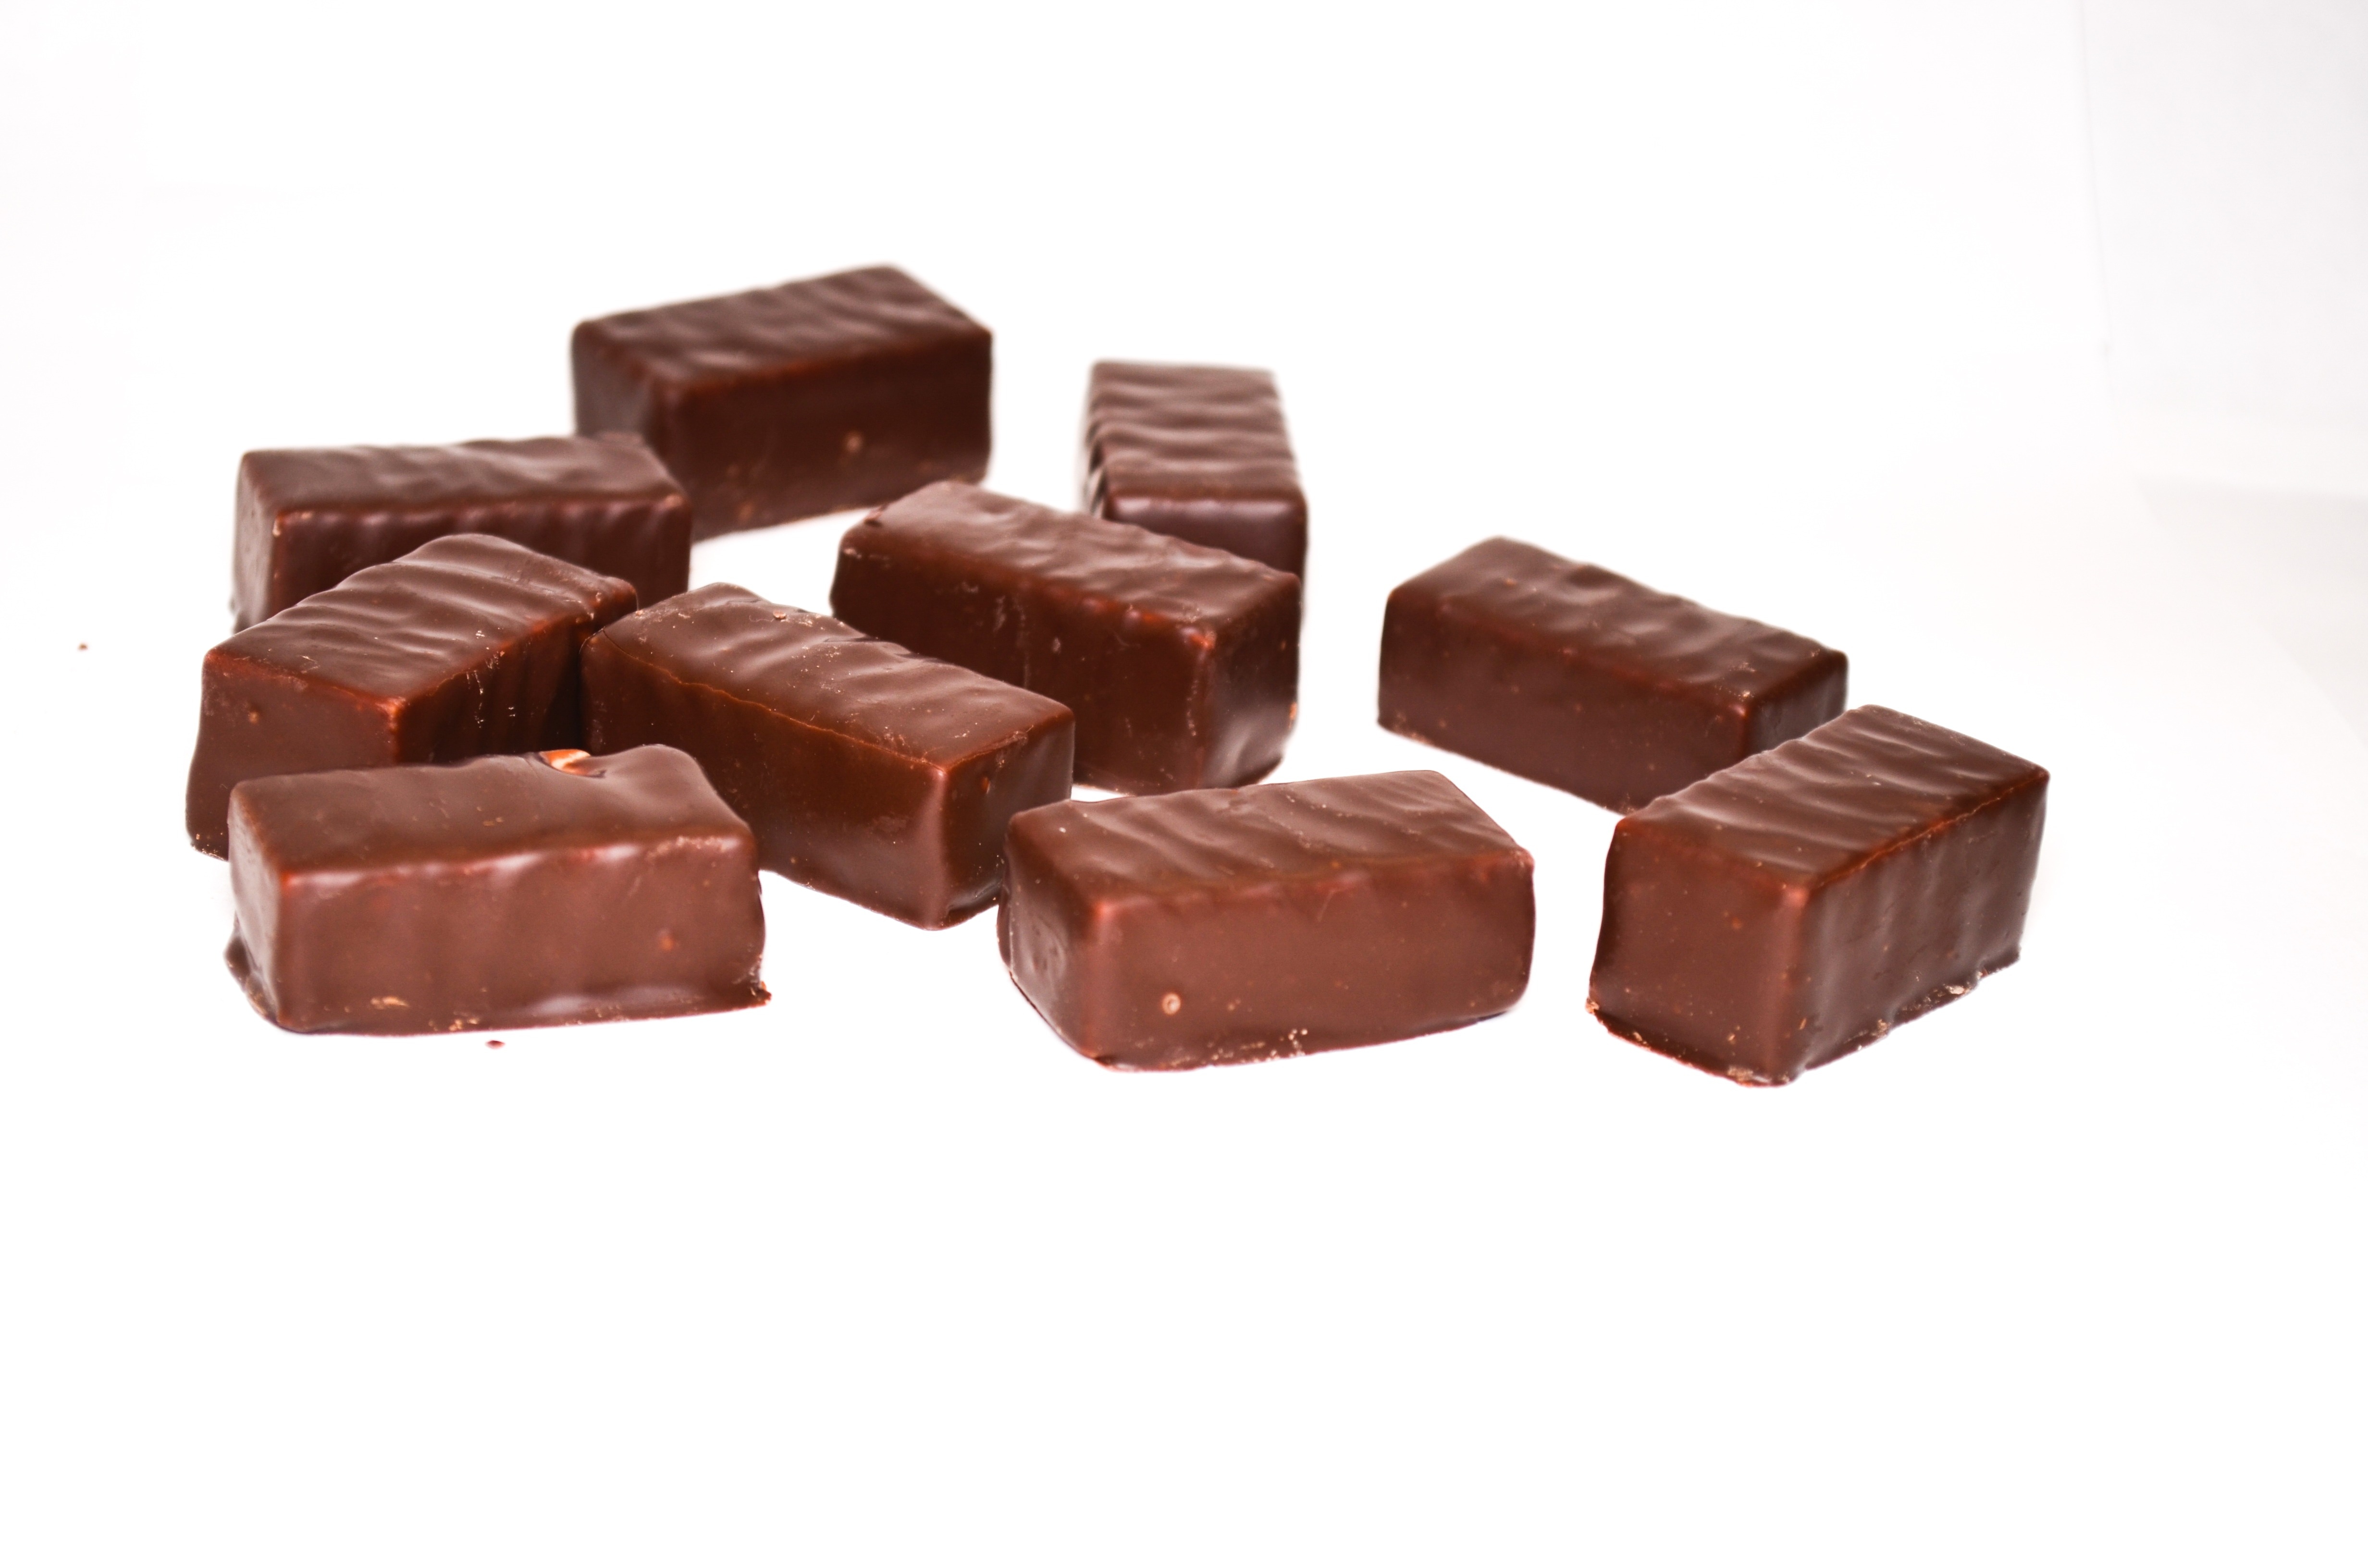 brown chocolate bars